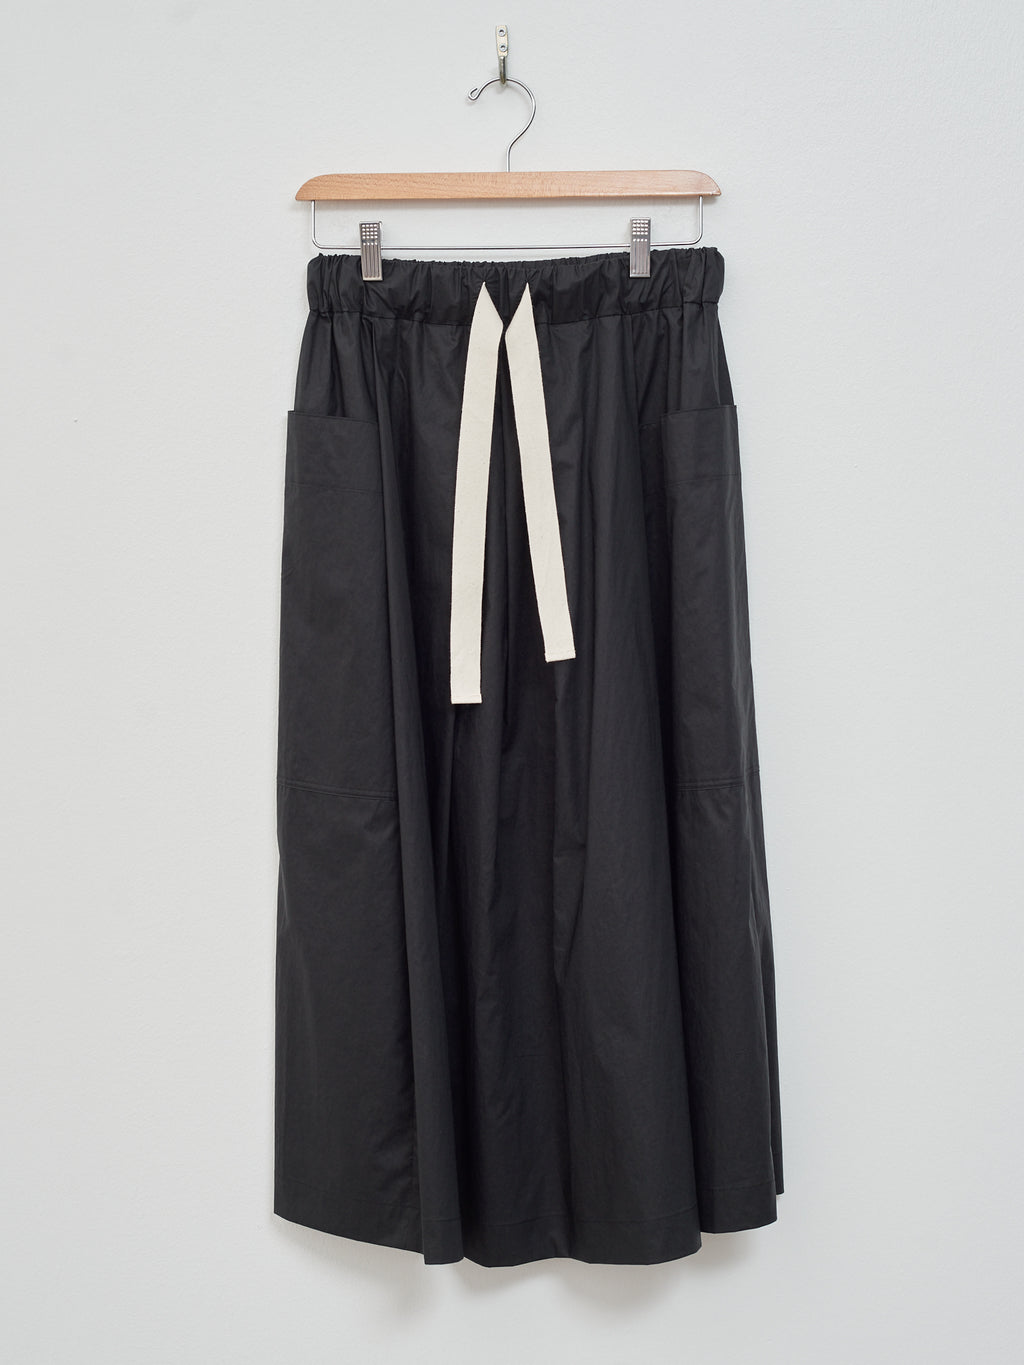 Namu Shop - Nicholson & Nicholson Kanon Poplin Skirt - Black